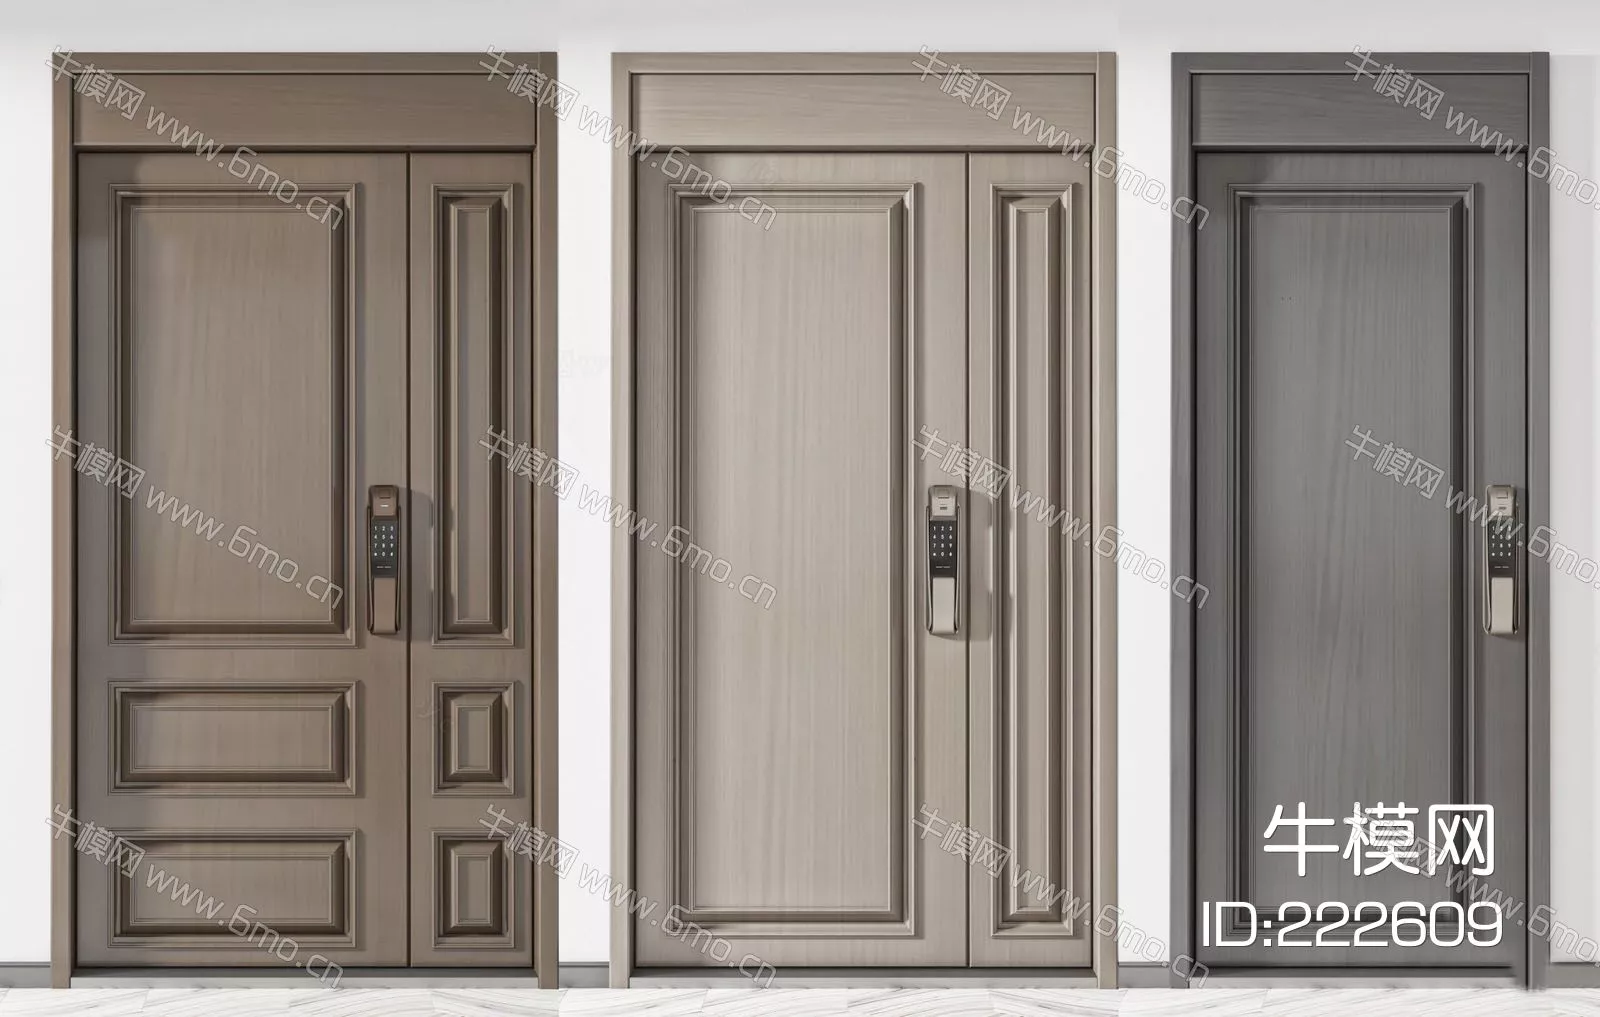 MODERN DOOR AND WINDOWS - SKETCHUP 3D MODEL - ENSCAPE - 222609